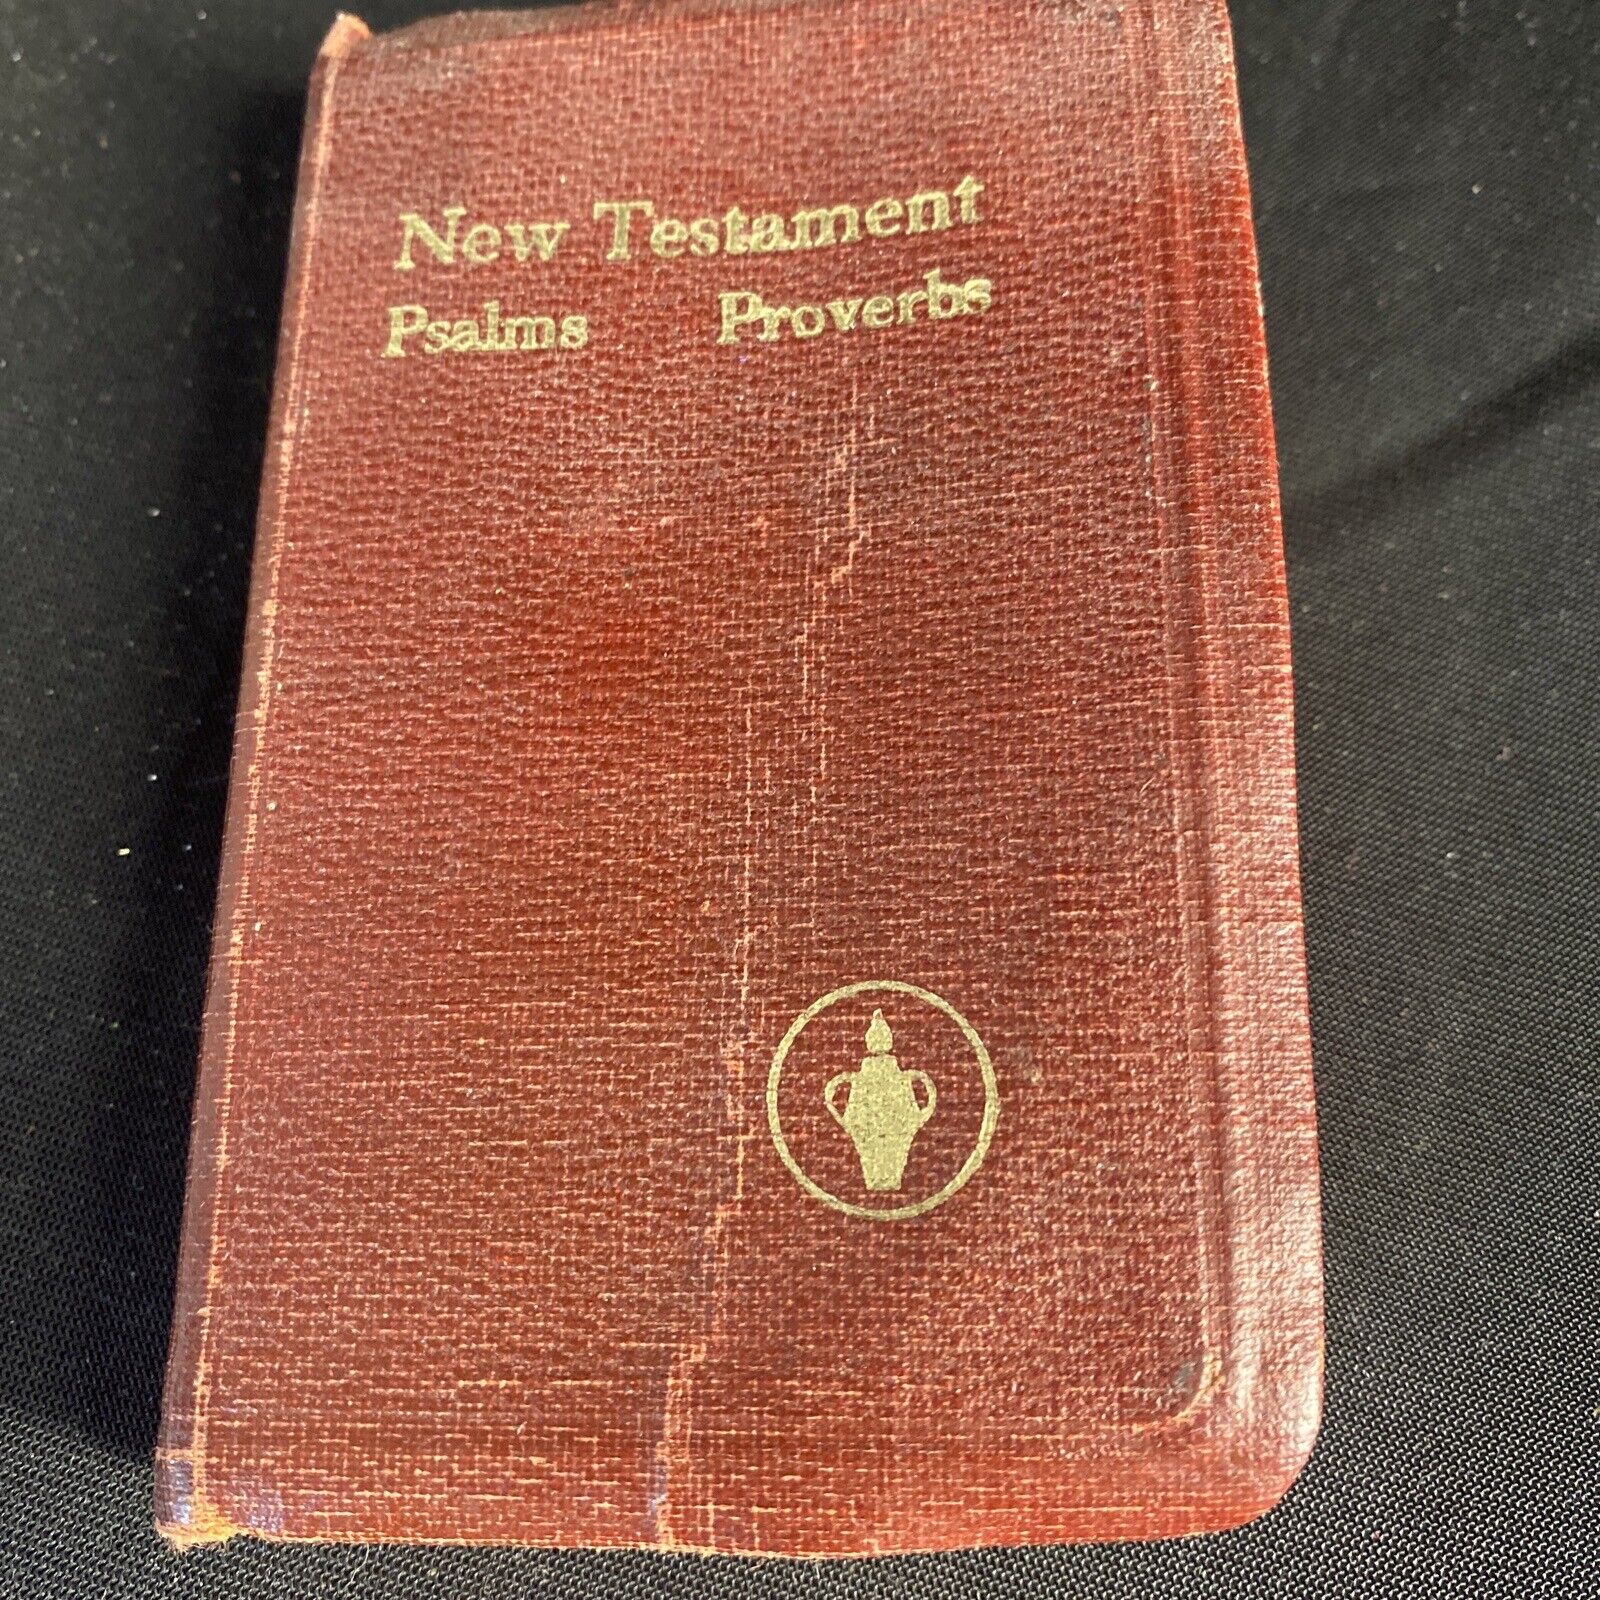 Vintage New Testament Psalms Proverbs Vest Pocket Bible Gideons